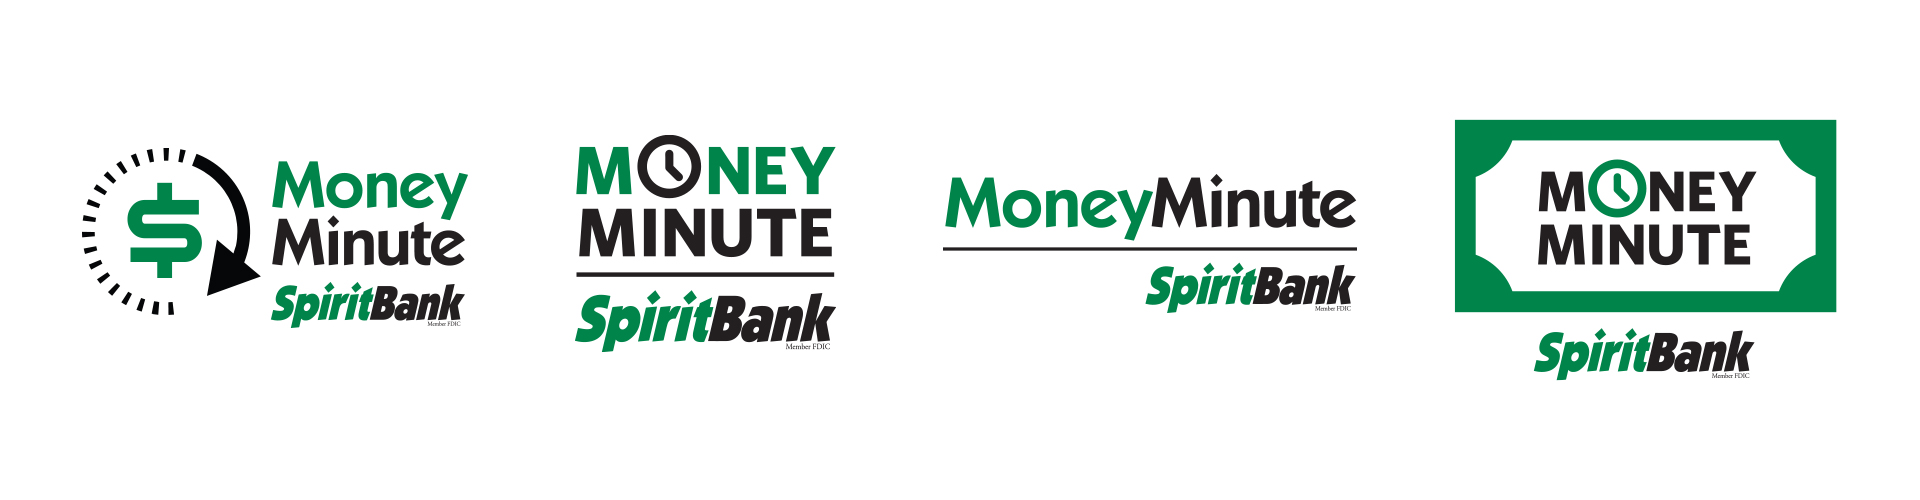 money minute logos